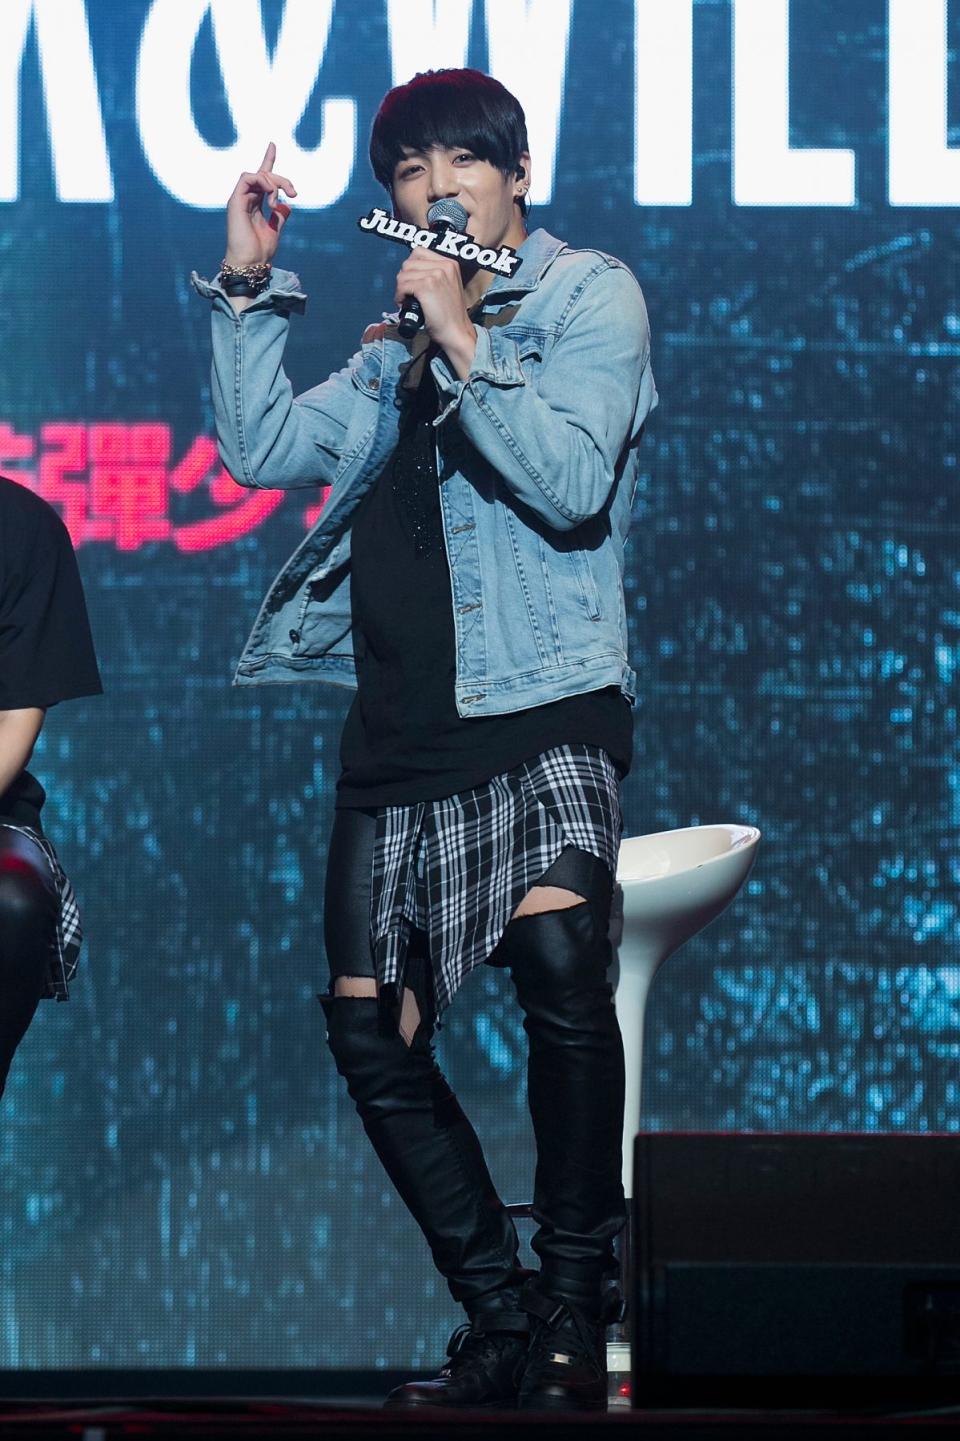 SEOUL, SOUTH KOREA - AUGUST 19: Jung Kook of BTS attends the BTS 1st Album 'Dark And Wild' Show Case' at the Samsung Card Hall on August 19, 2014 in Seoul, South Korea. (Photo by Han Myung-Gu/WireImage)